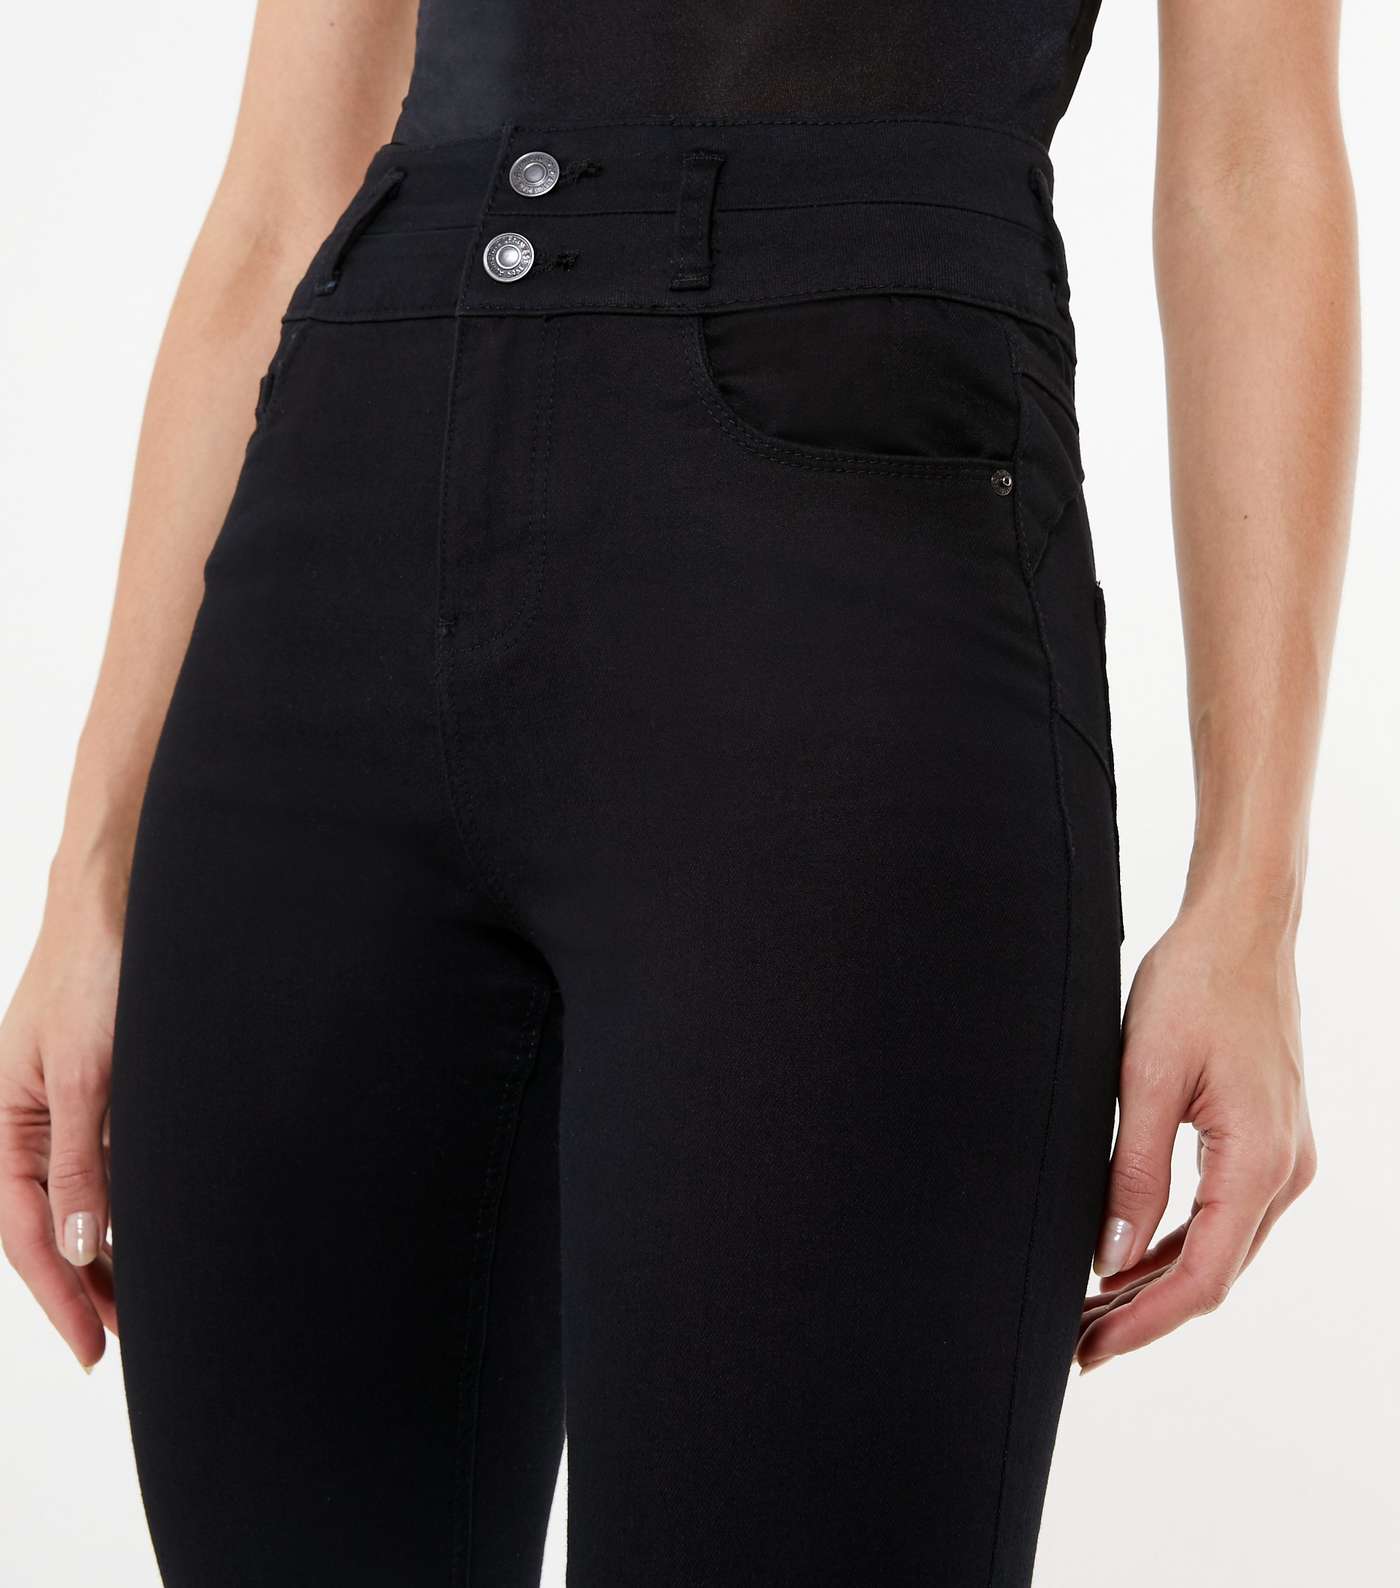 Black 'Lift & Shape' High Waist Yazmin Skinny Jeans Image 4